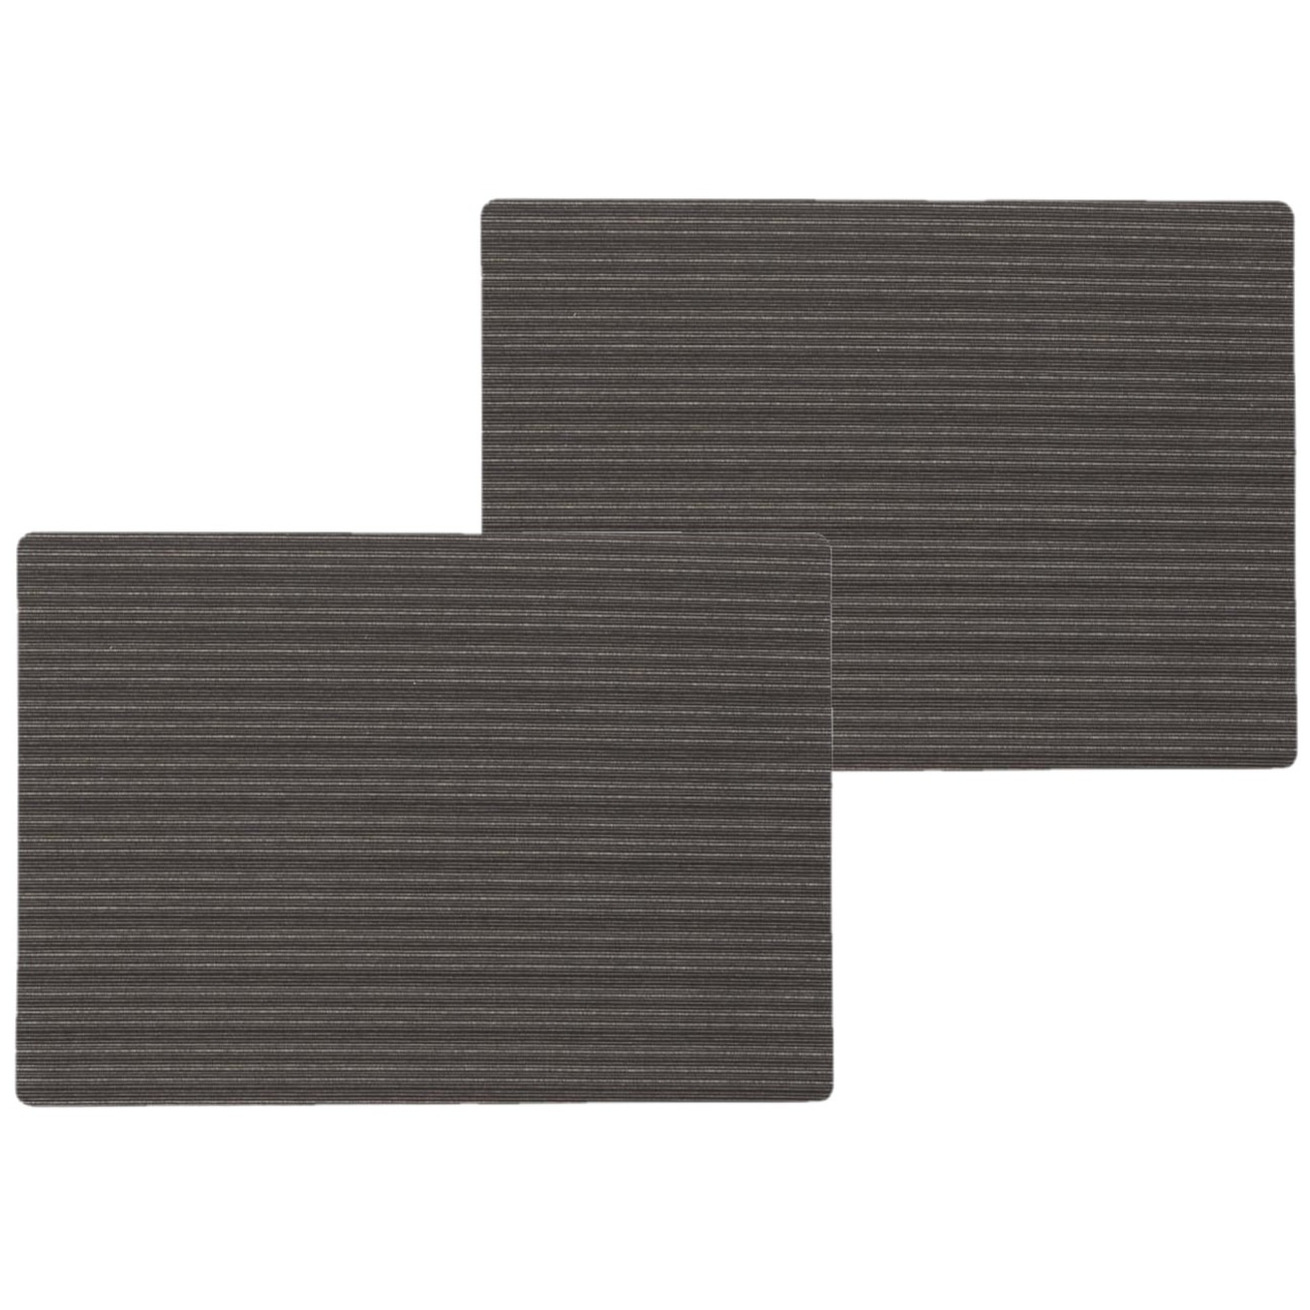 Wicotex 12x stuks stevige luxe Tafel placemats Lines zwart 30 x 43 cm -